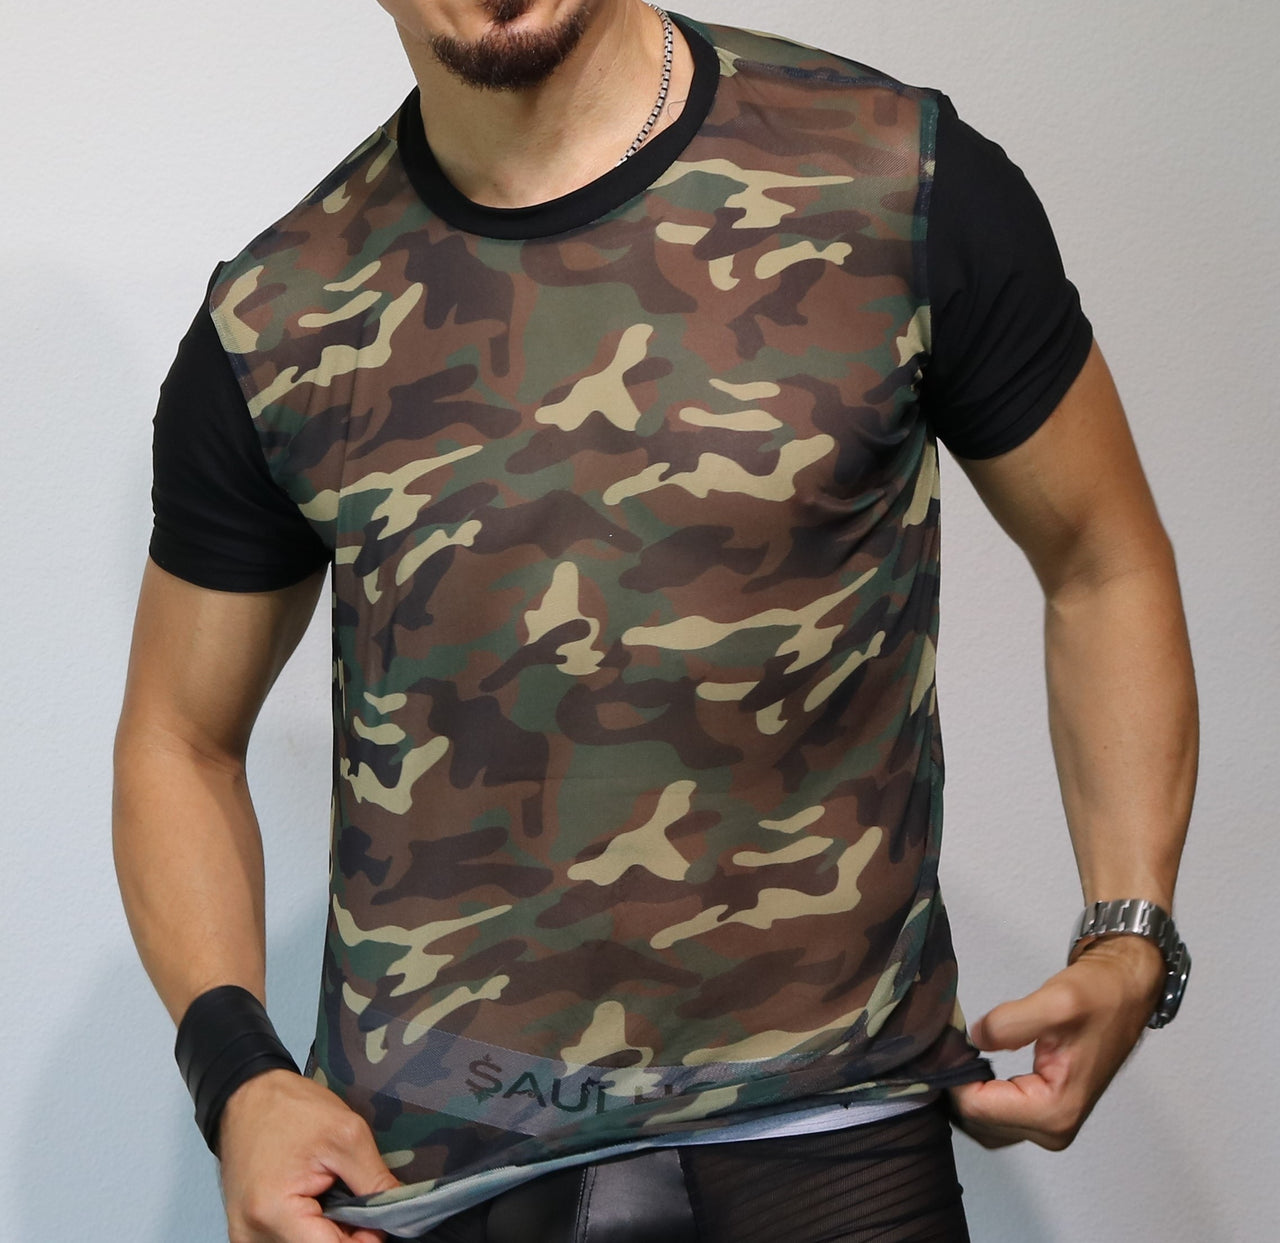 Saulho Camouflage Body Mesh Short Sleeve T-Shirt